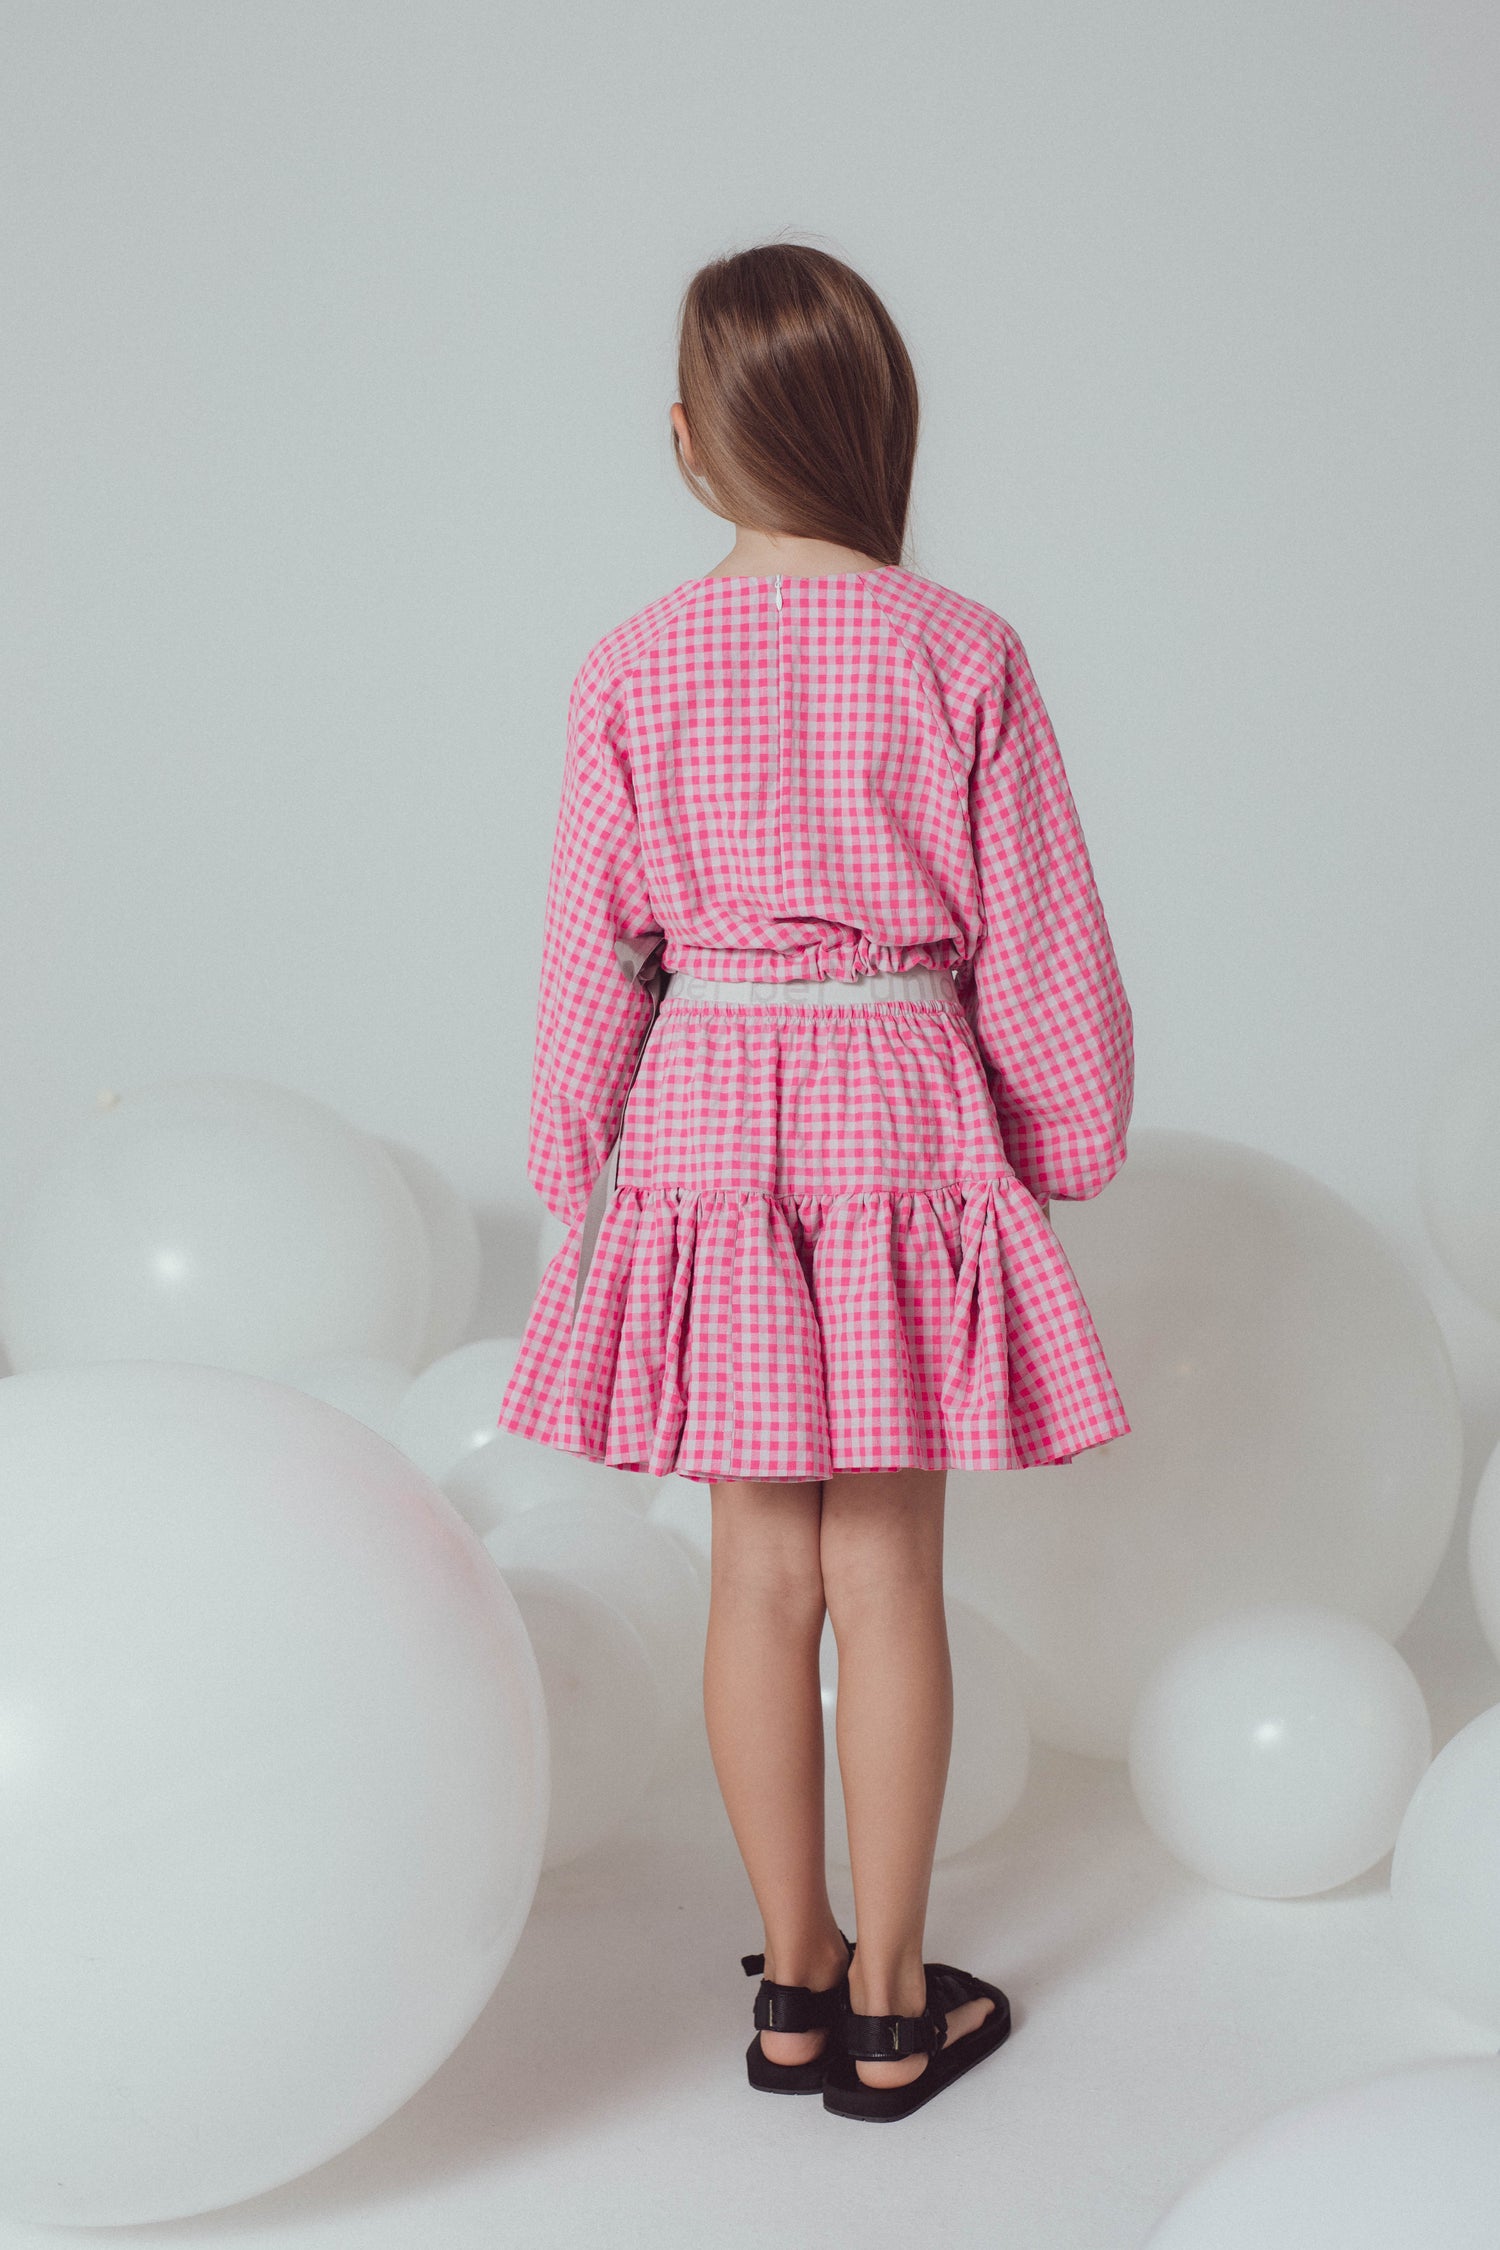 Unlabel Pink and Grey Checks Ava Skirt